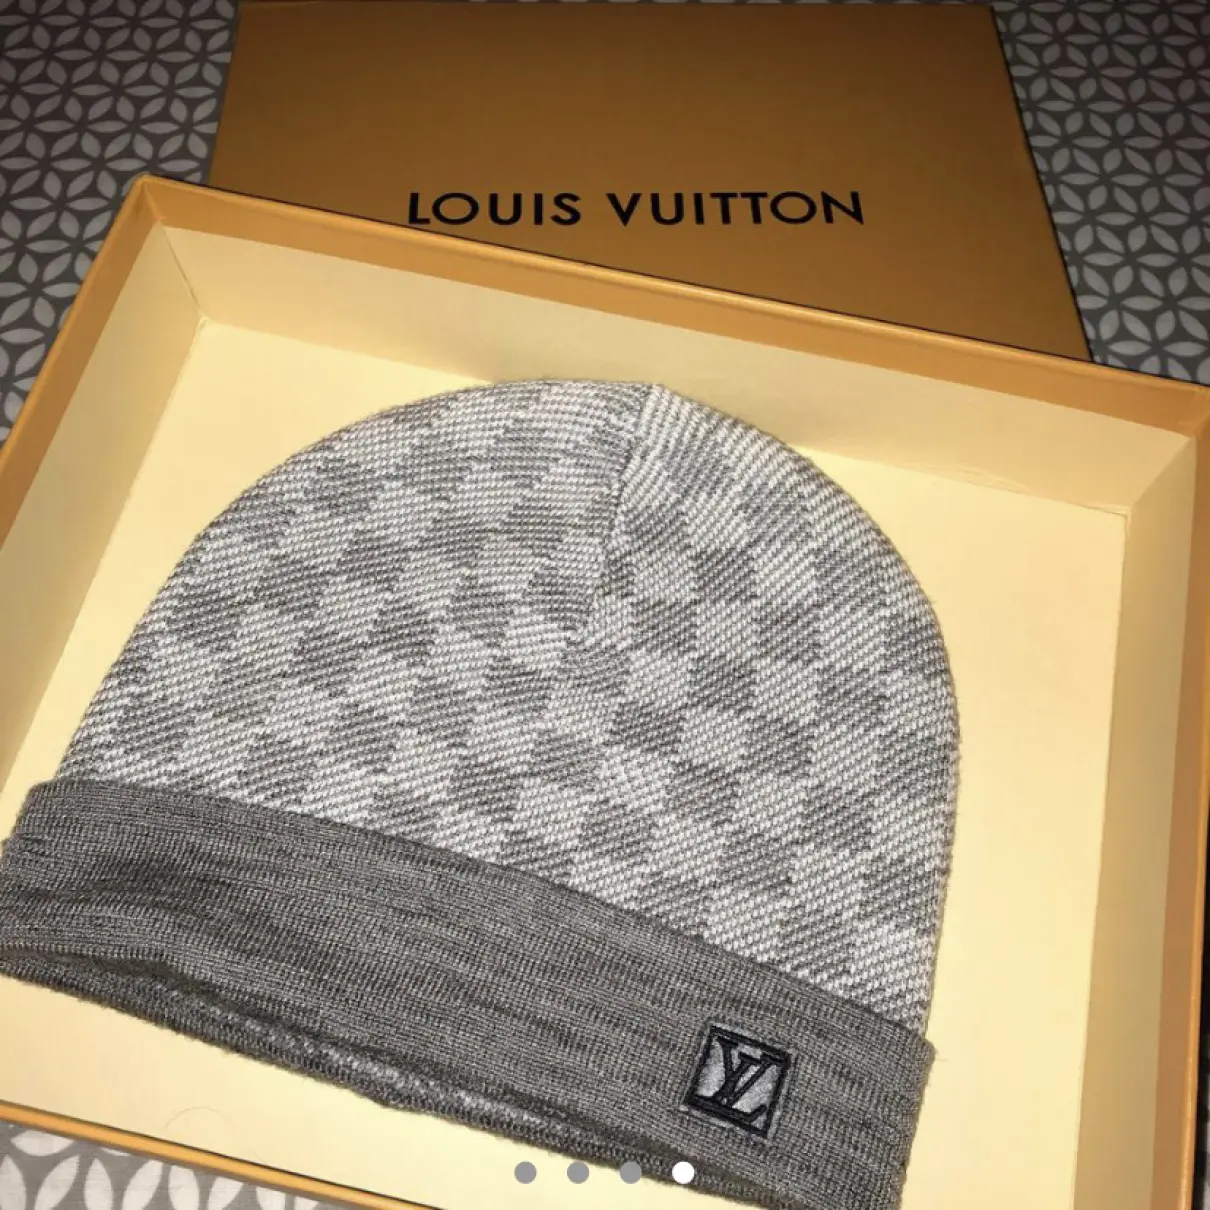 Buy Louis Vuitton Wool hat online